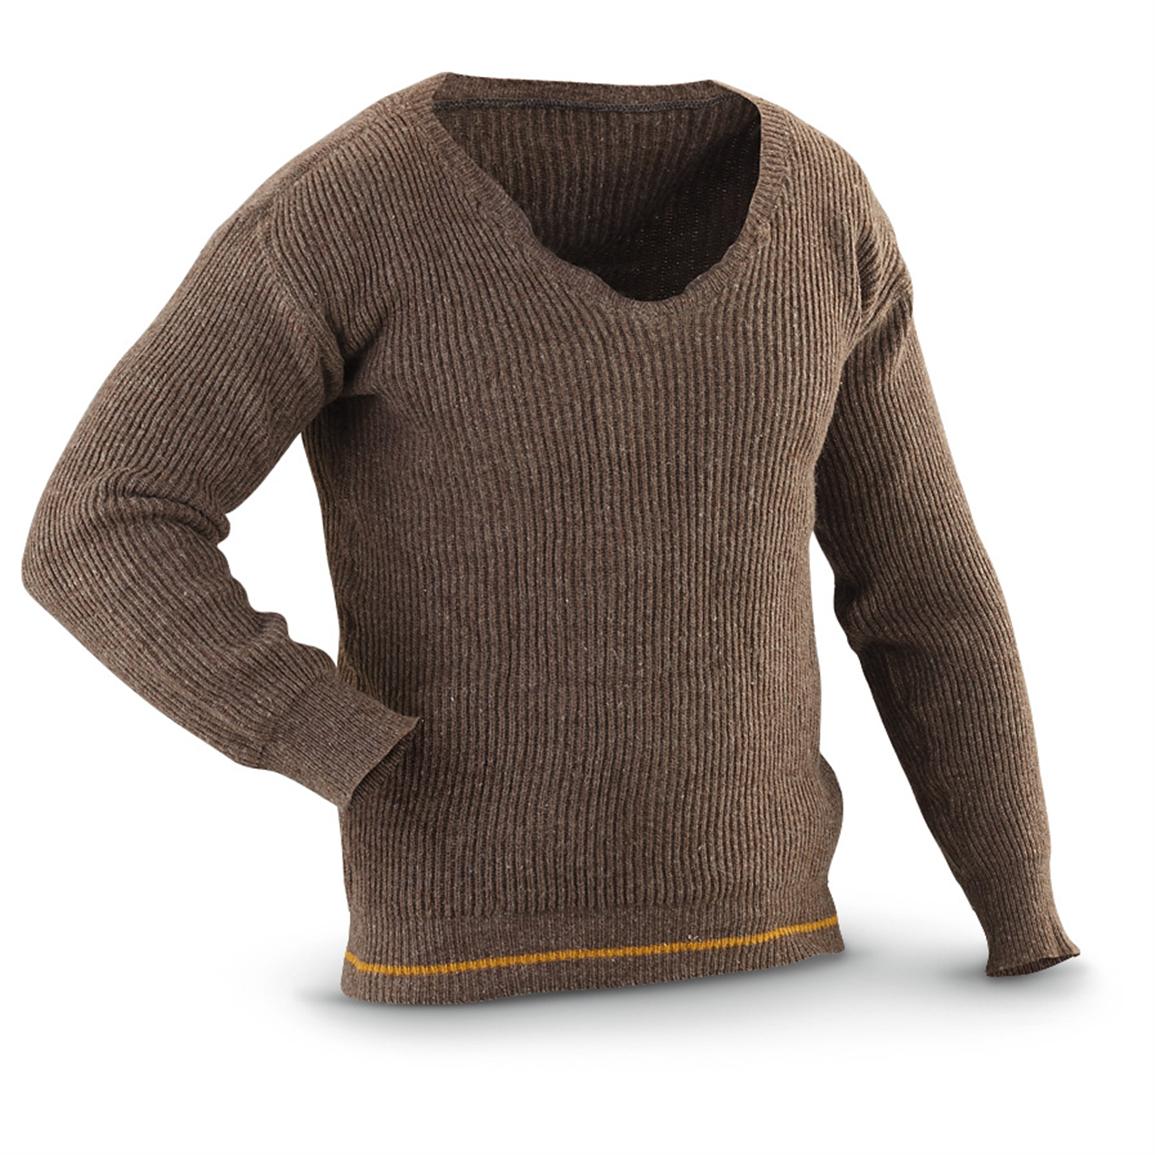 4 Used Swedish Military Surplus Wool Sweaters 223016, Sweaters at